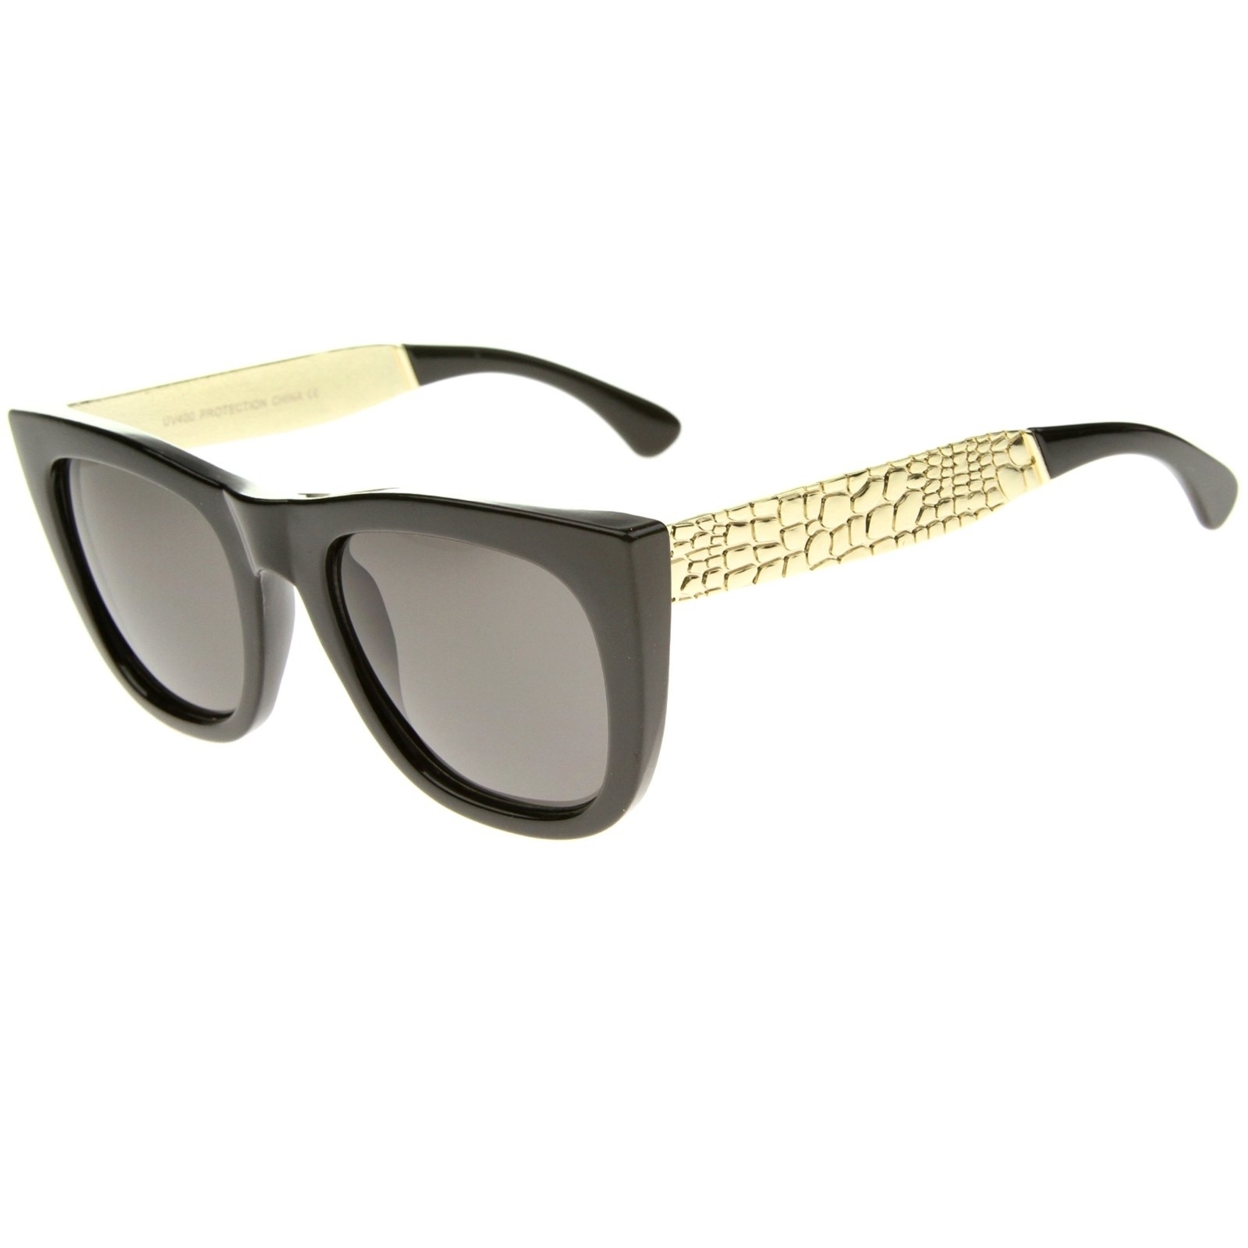 High Fashion Alligator Metal Temple Bold Rimmed Flat Top Sunglasses - Tortoise-Gold / Brown